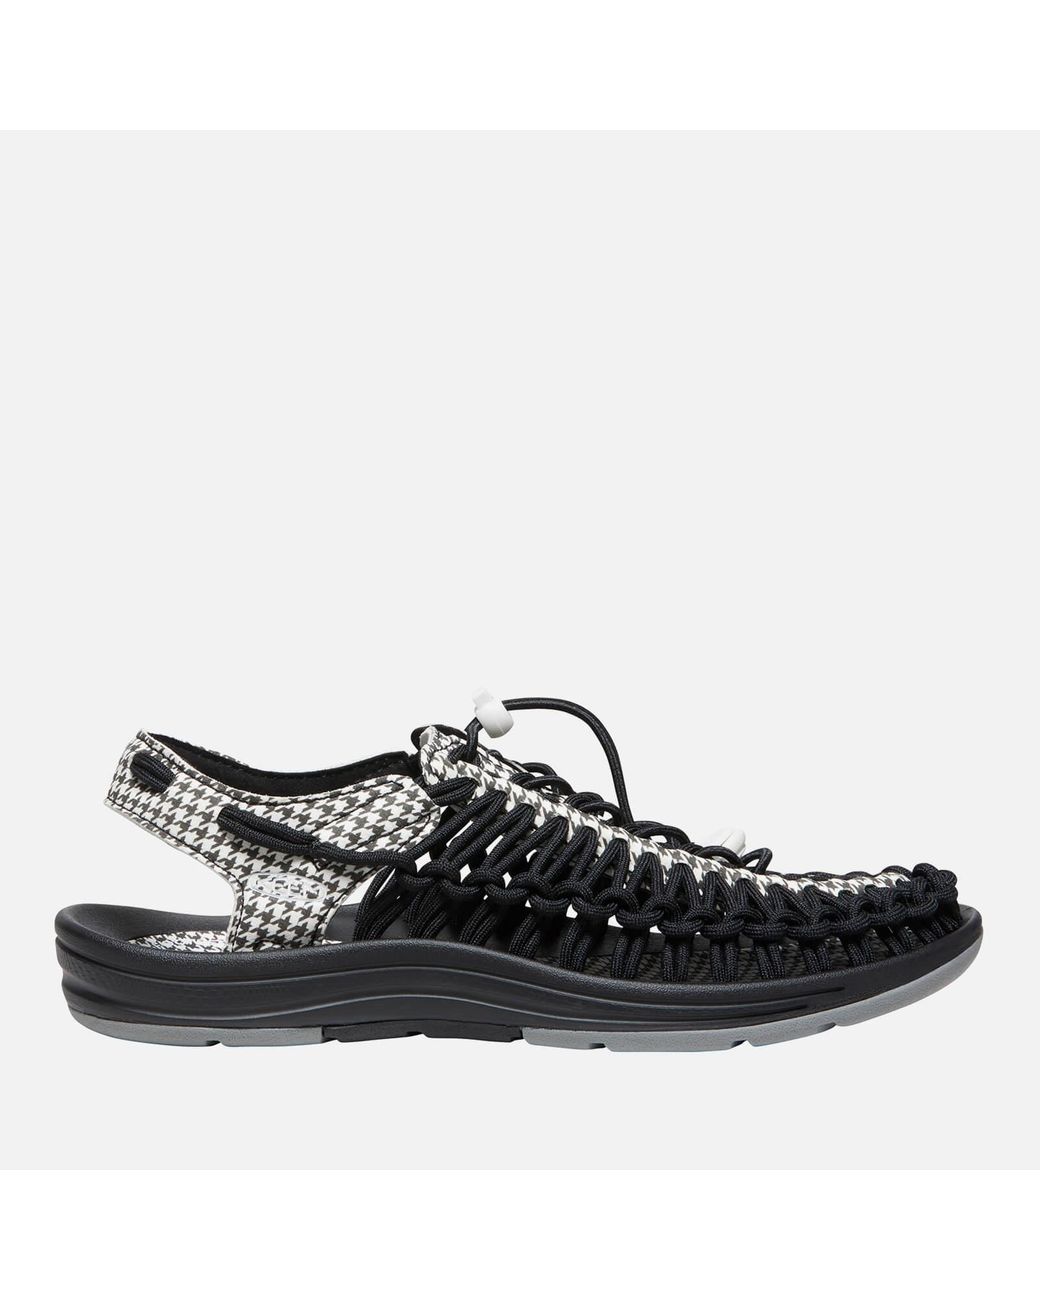 Keen Uneek Corded Sandals in Black | Lyst